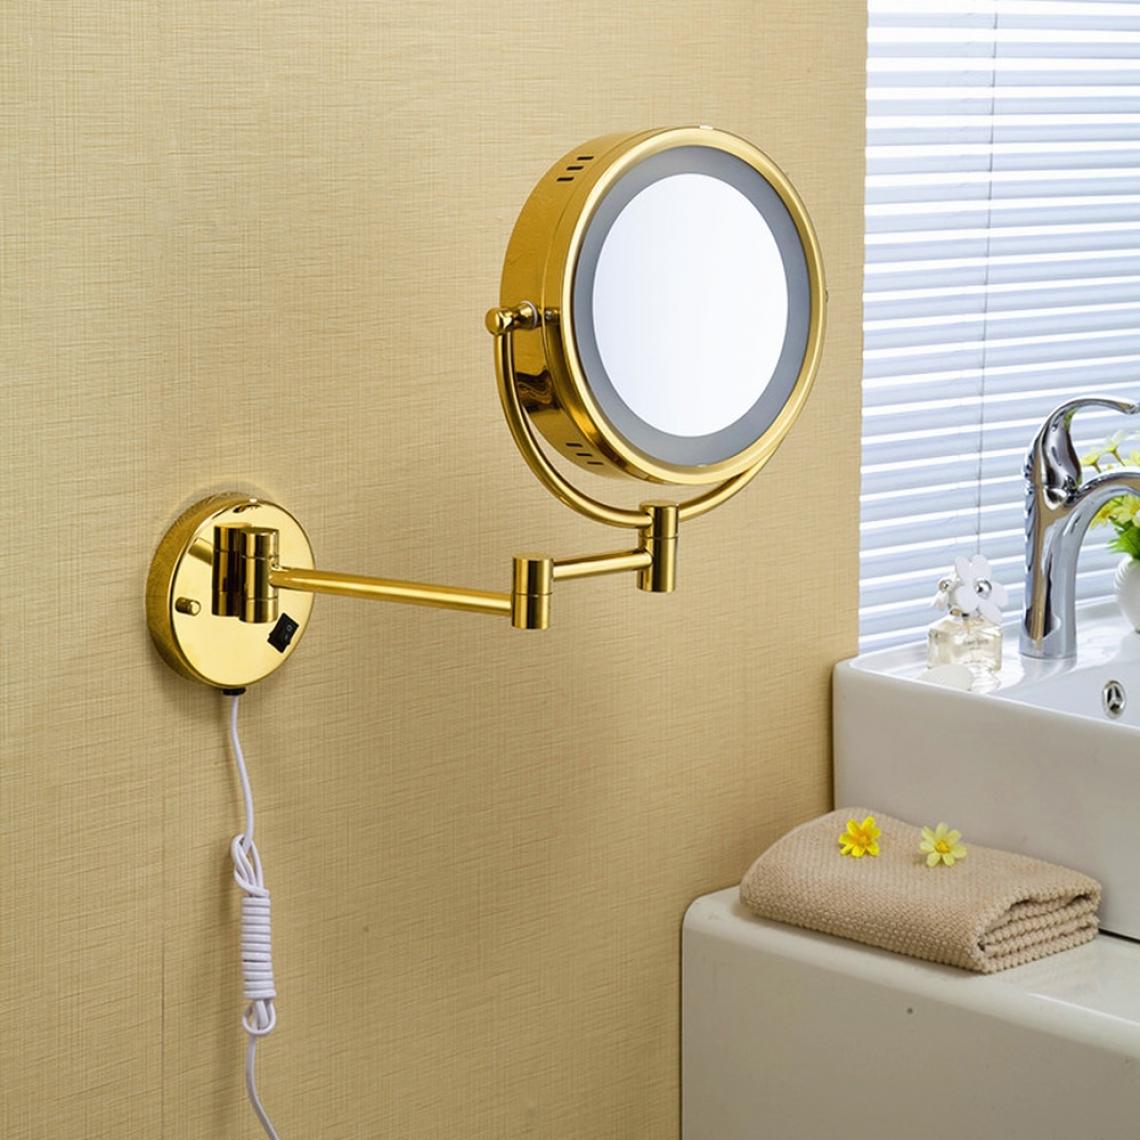 Universal - Miroir de bain Miroir de maquillage mural rond 3x1 loupe LED laiton or pliant miroir de maquillage de salle de bain |(Or) - Miroir de salle de bain